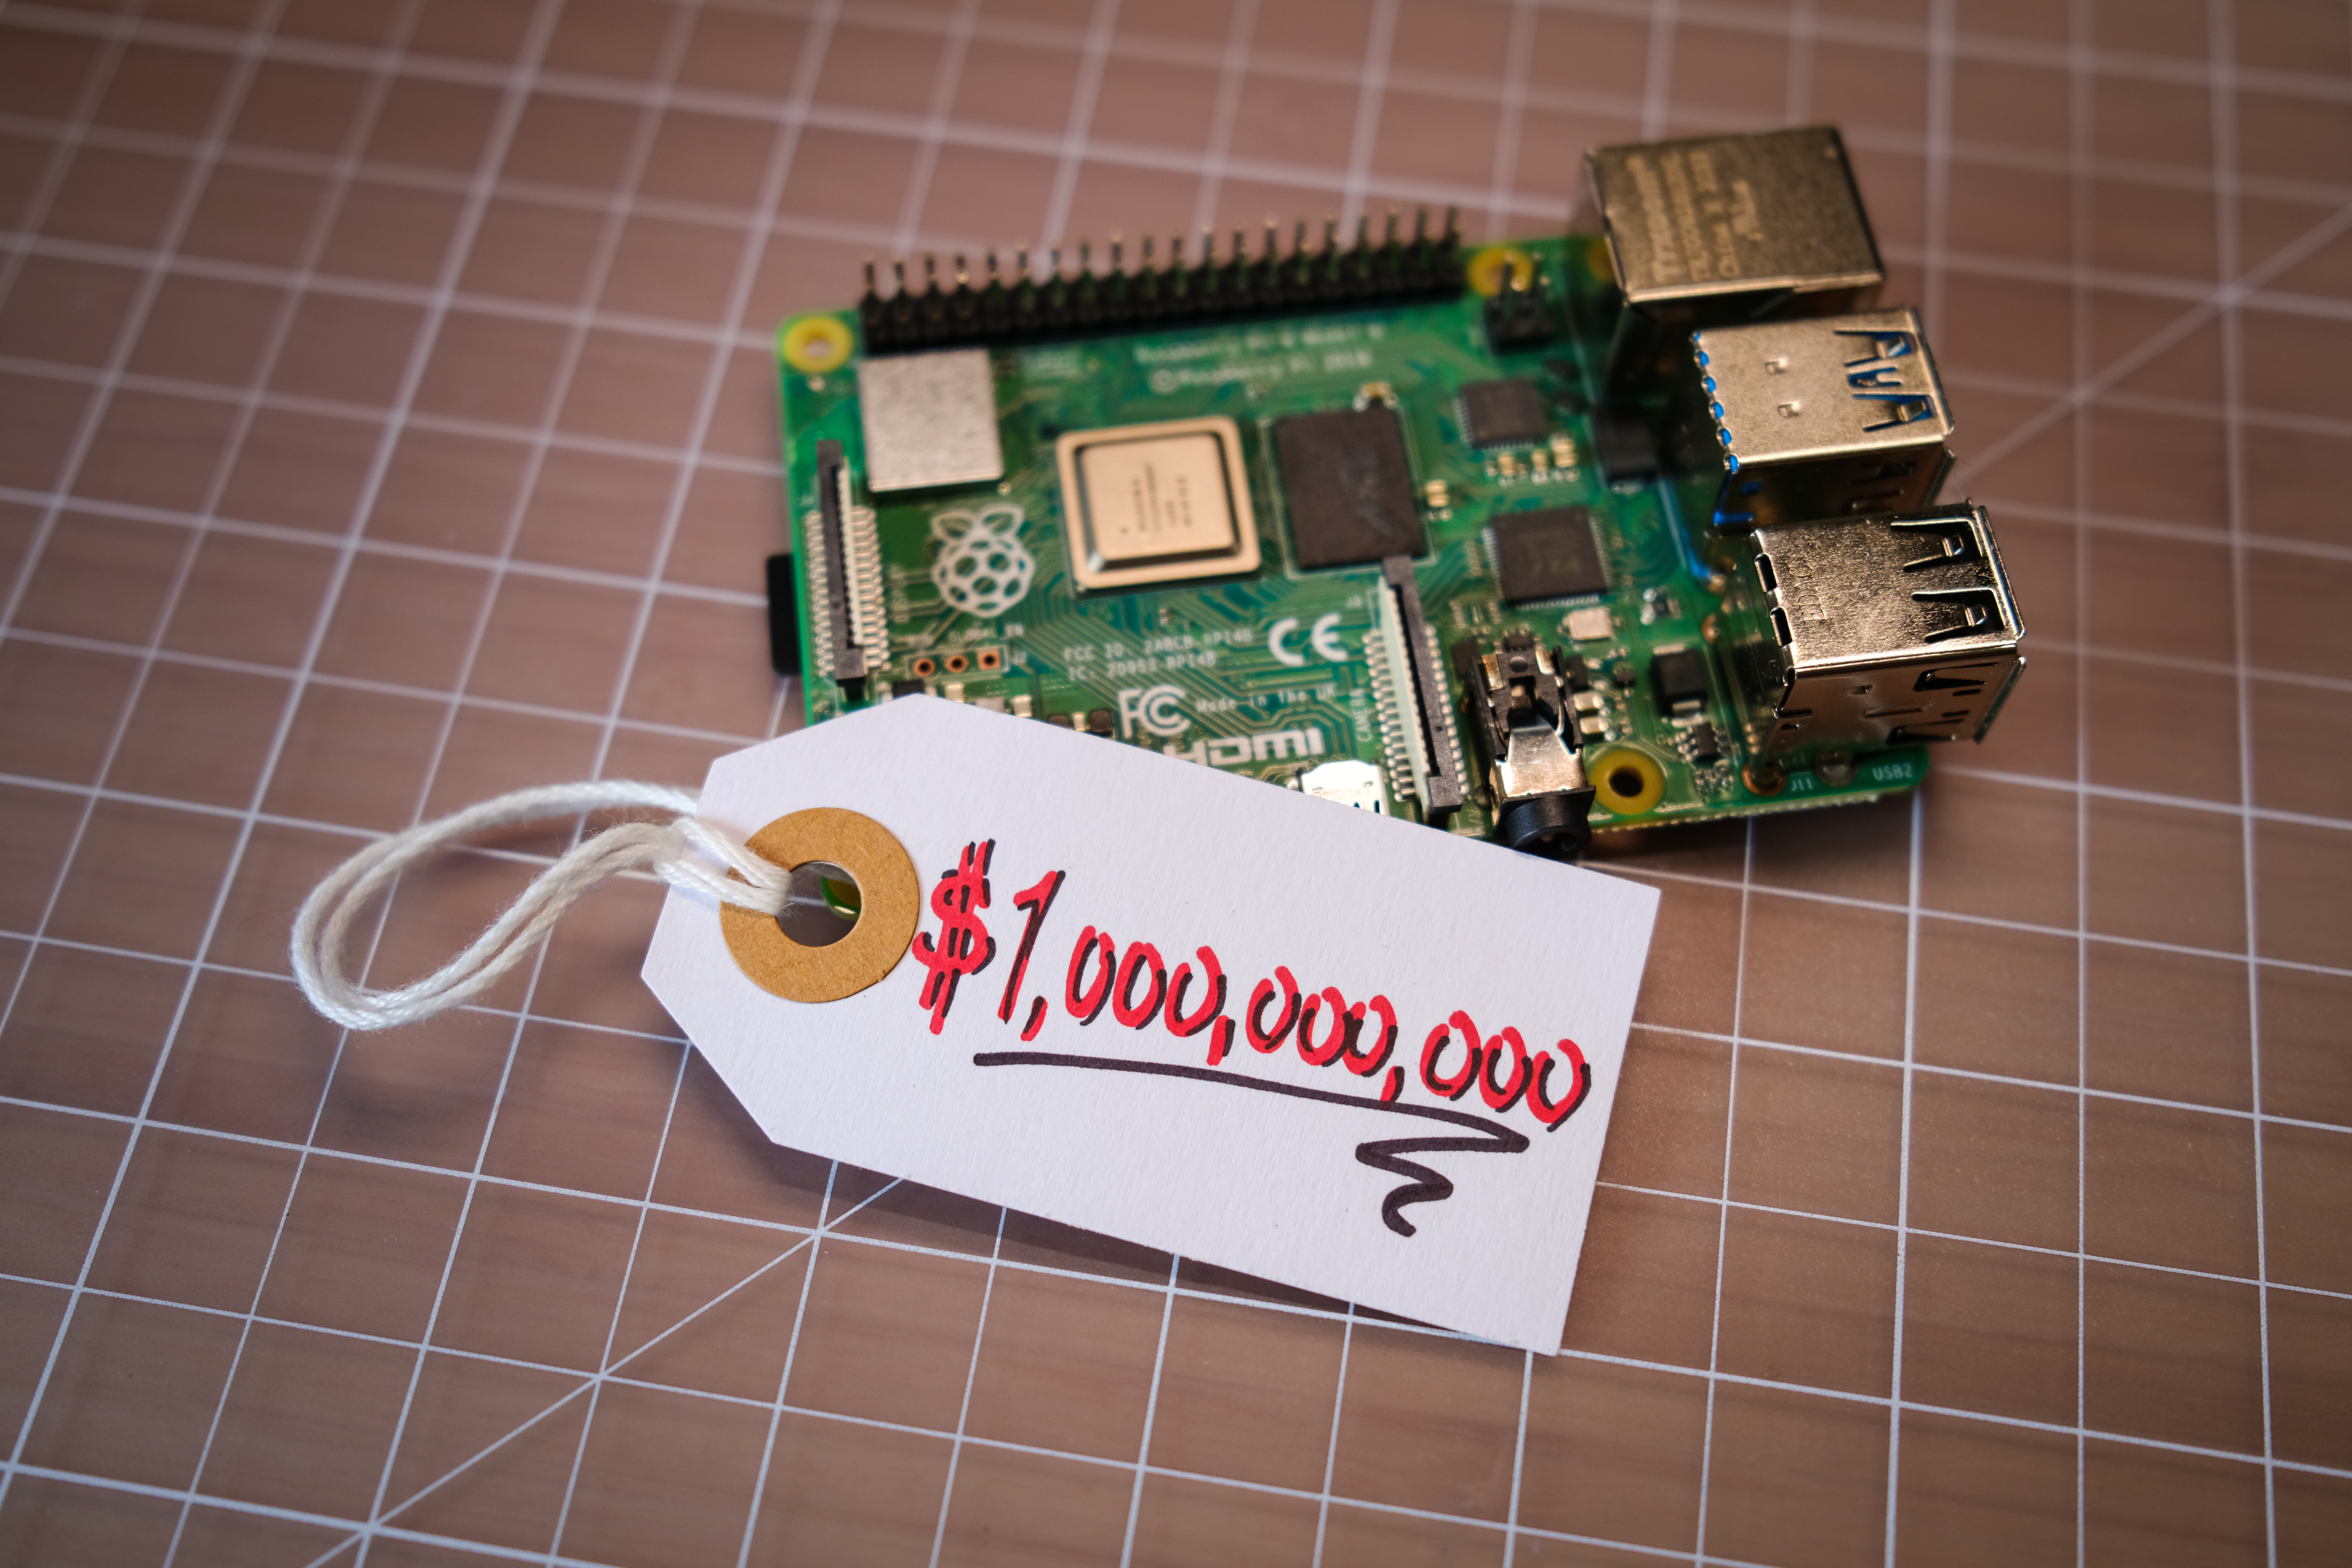 Raspberry Pi with a one billion dollar price tag